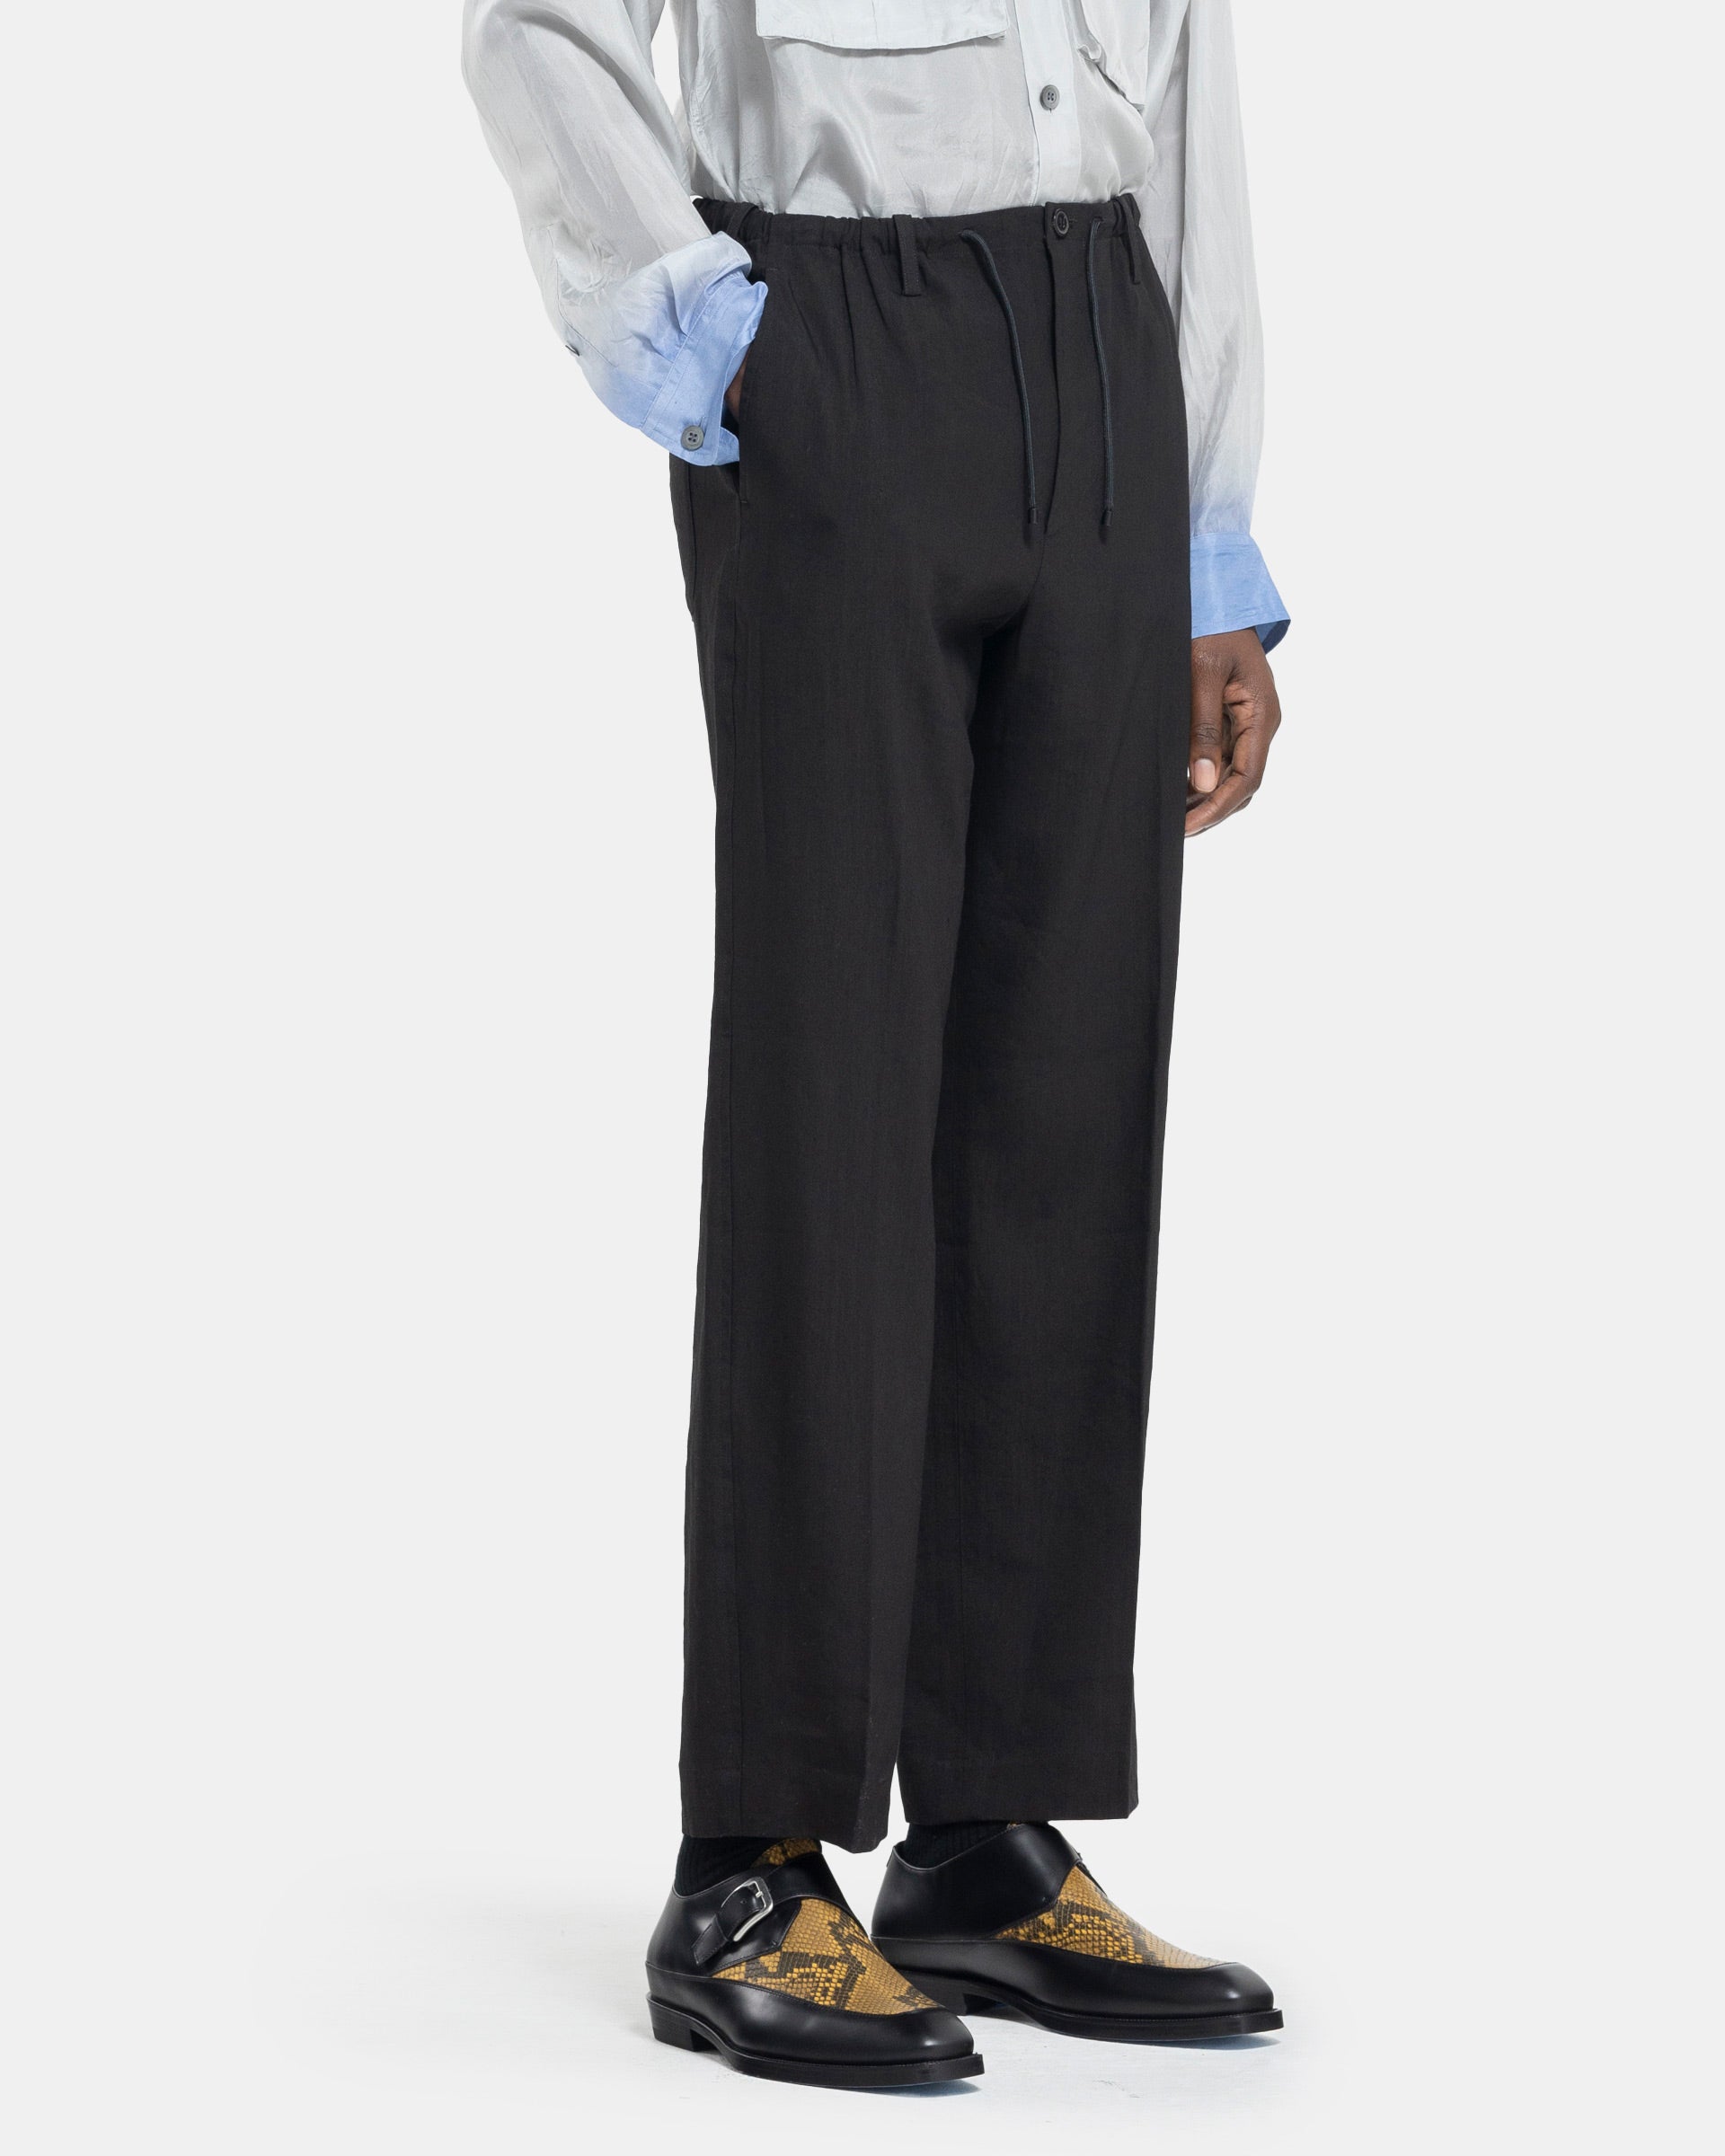 Model wearing Dries Van Noten Penny Pants in Black on white background